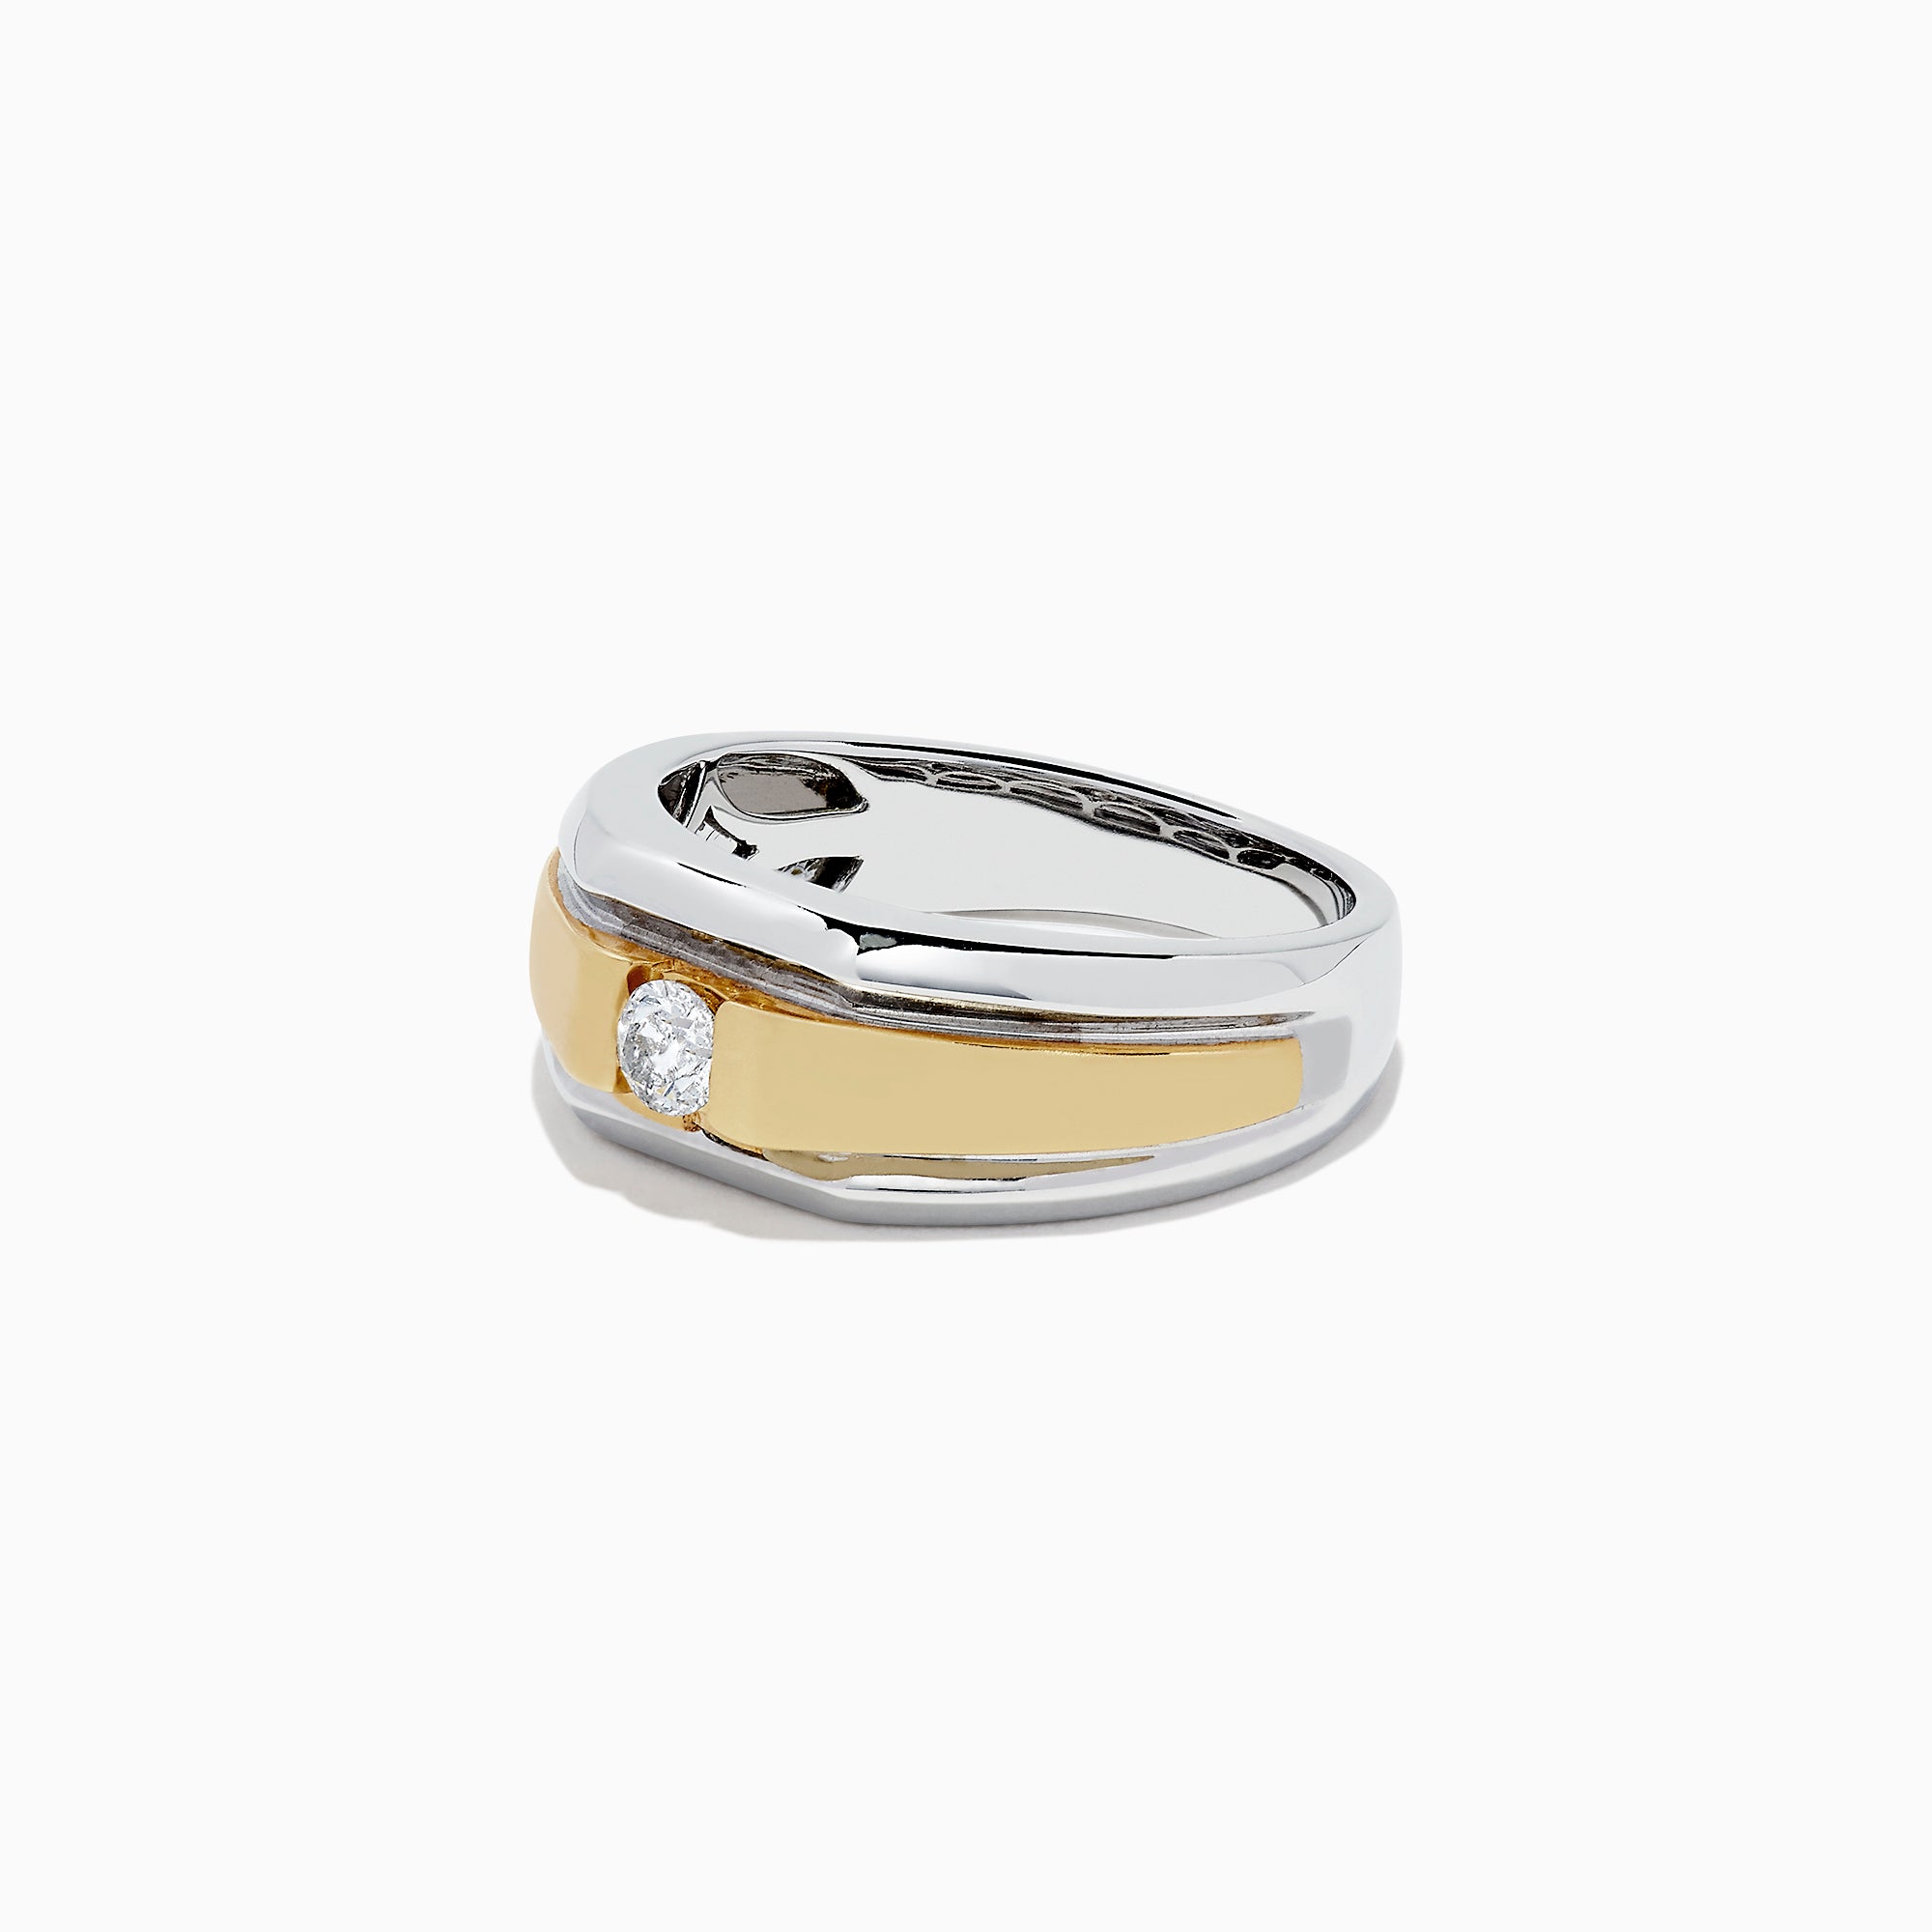 Effy Men's' 14K Two Tone Gold Diamond Ring, 0.25 TCW